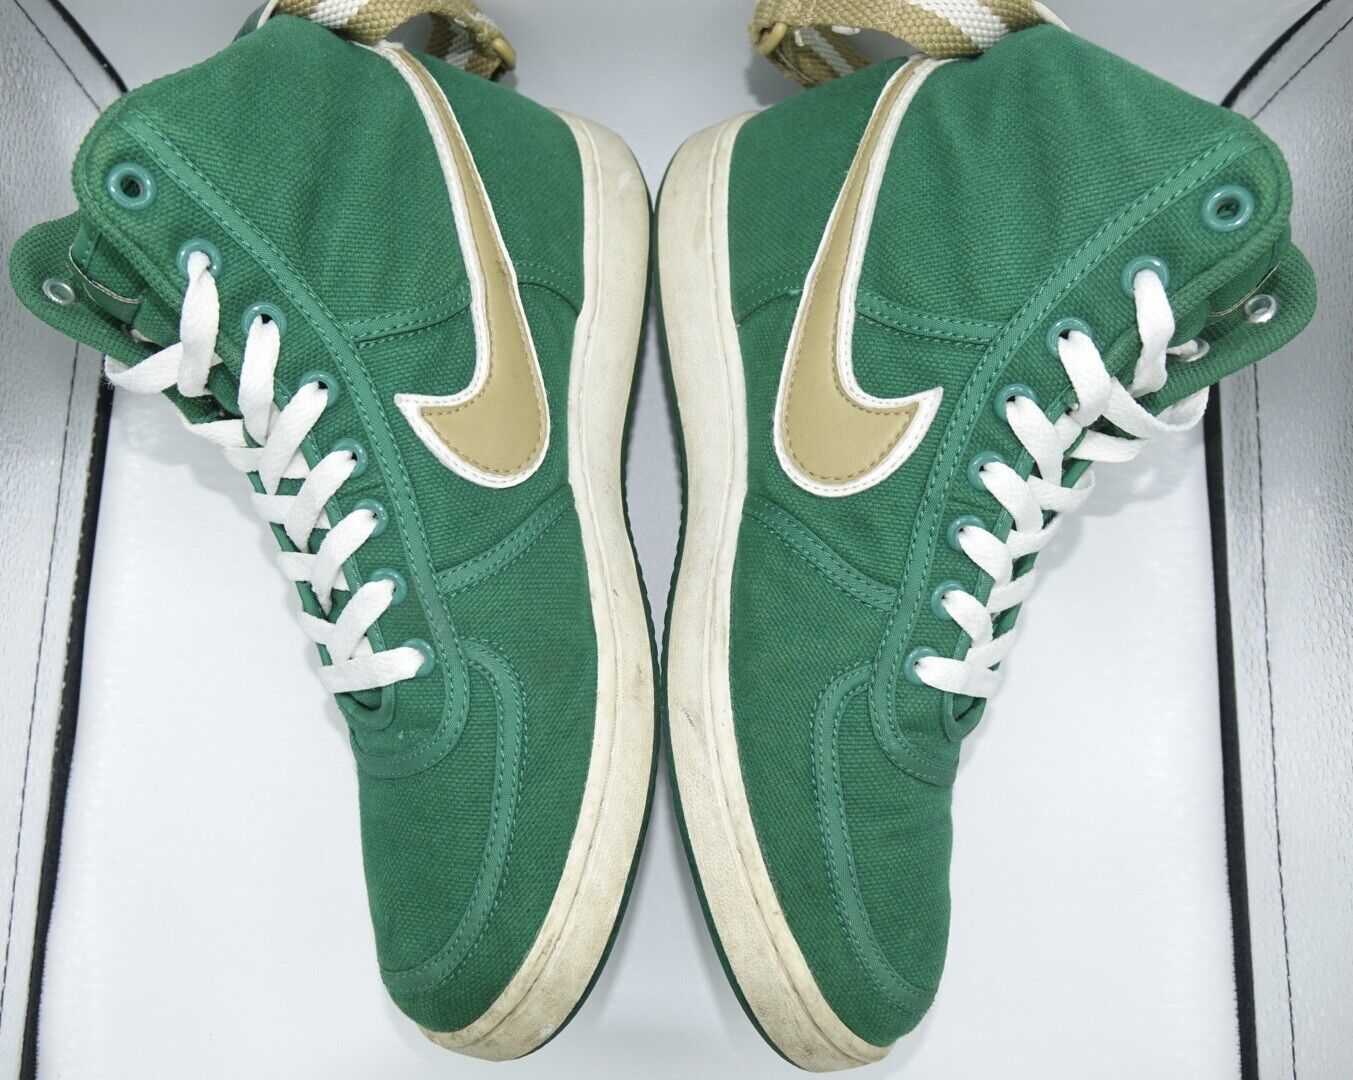 Size 8.5 - Nike Vandal High Canvas Green for sale online | eBay